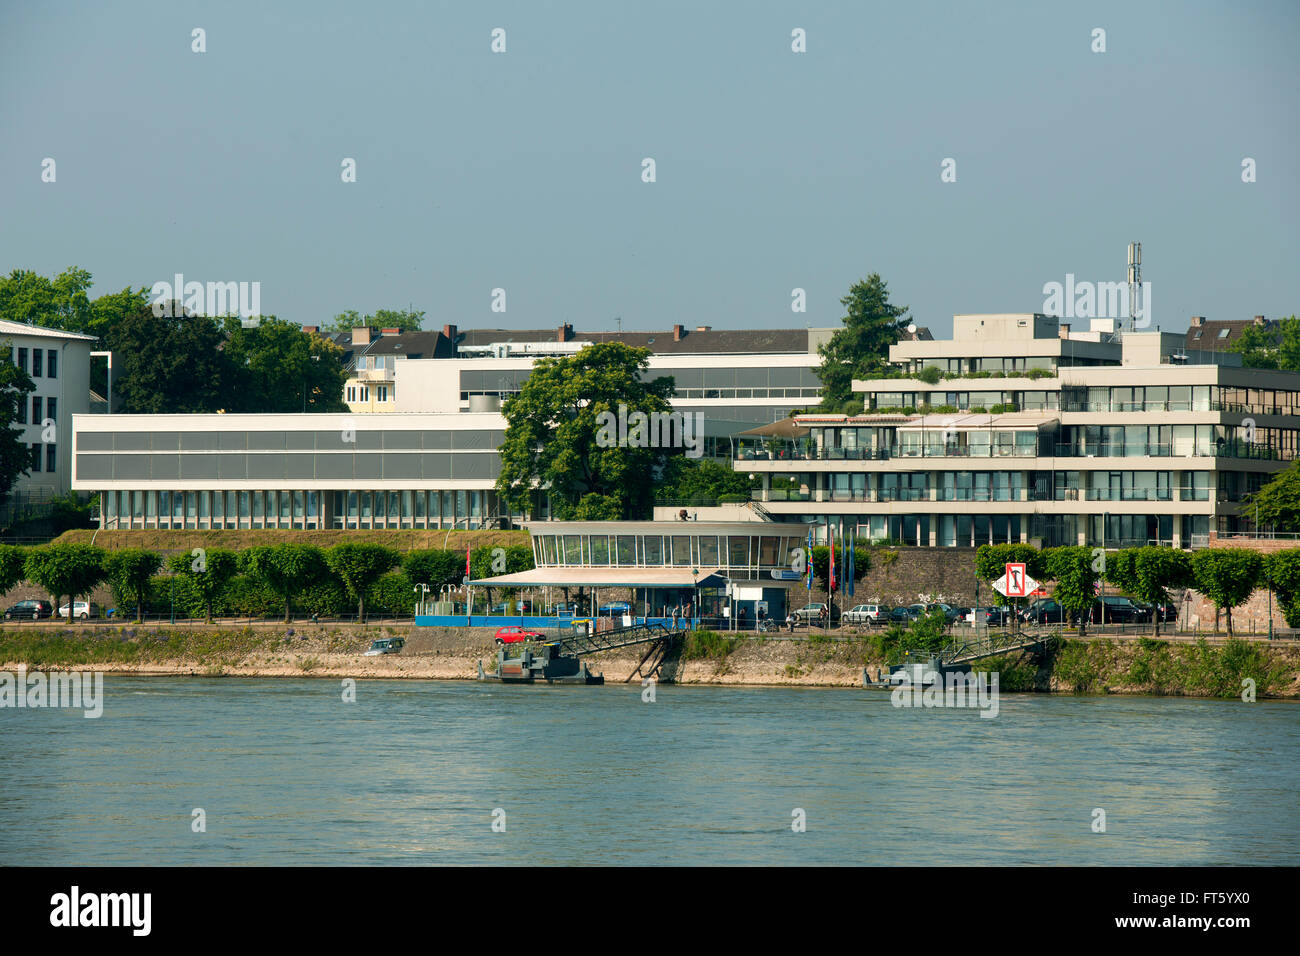 Deutschland, Renania settentrionale-Vestfalia, Bonn, Blick auf das Rathenauufer mit dem Rheinpavillion Foto Stock